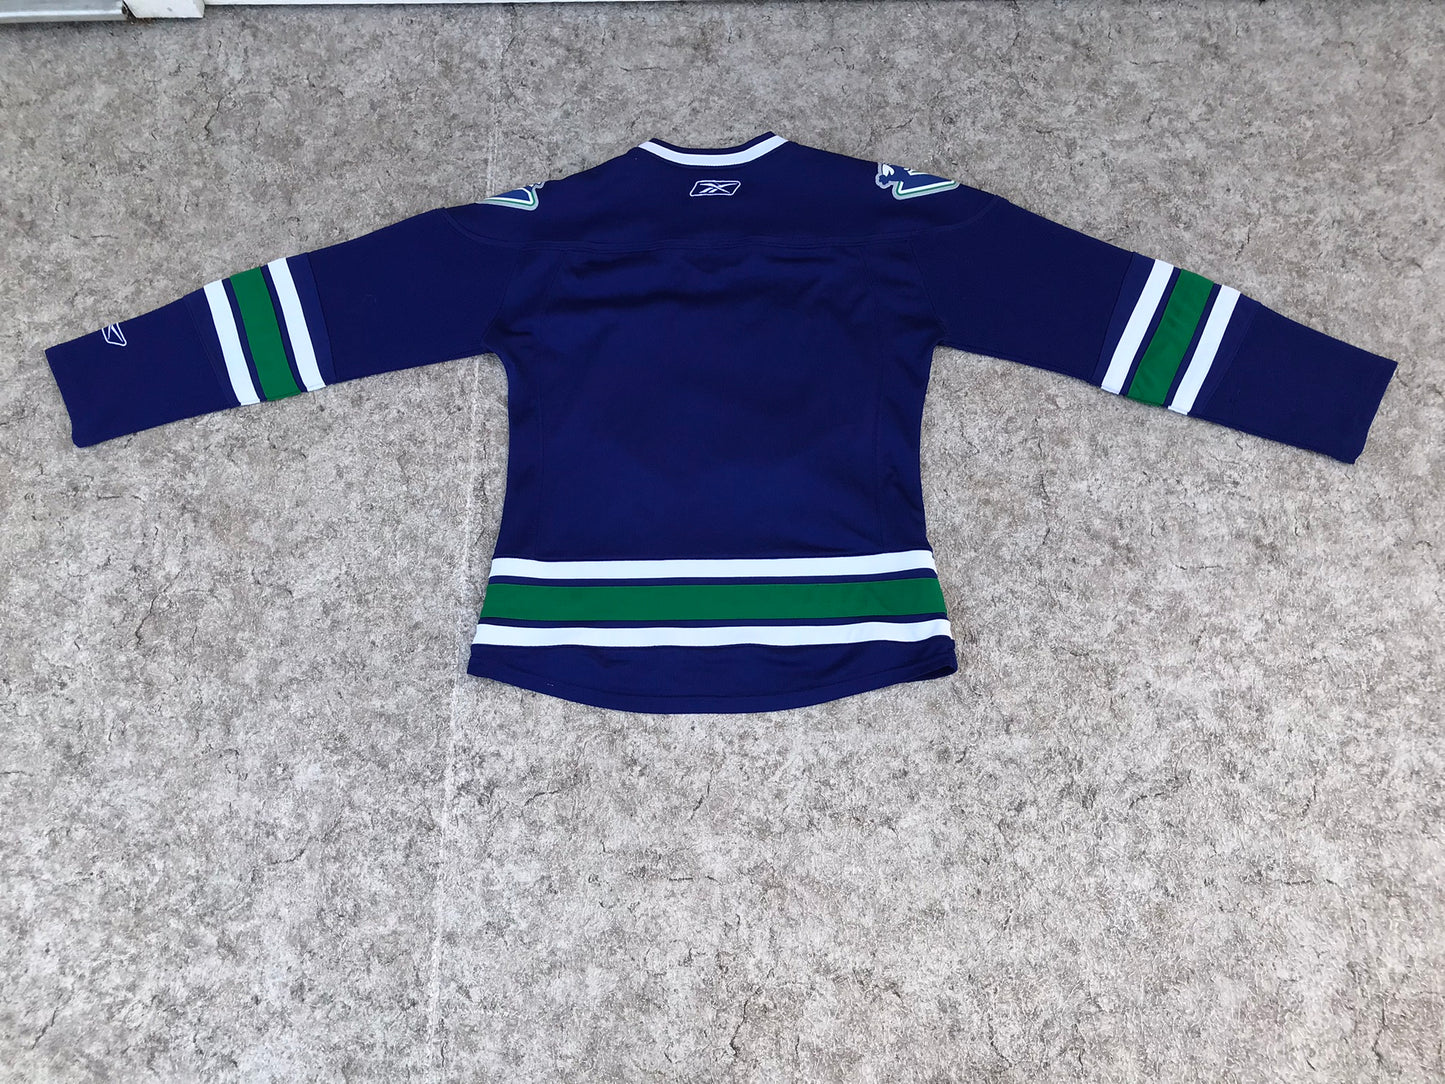 Hockey Jersey Ladies Size Medium Vintage Vancouver Canucks Blue Green Excellent